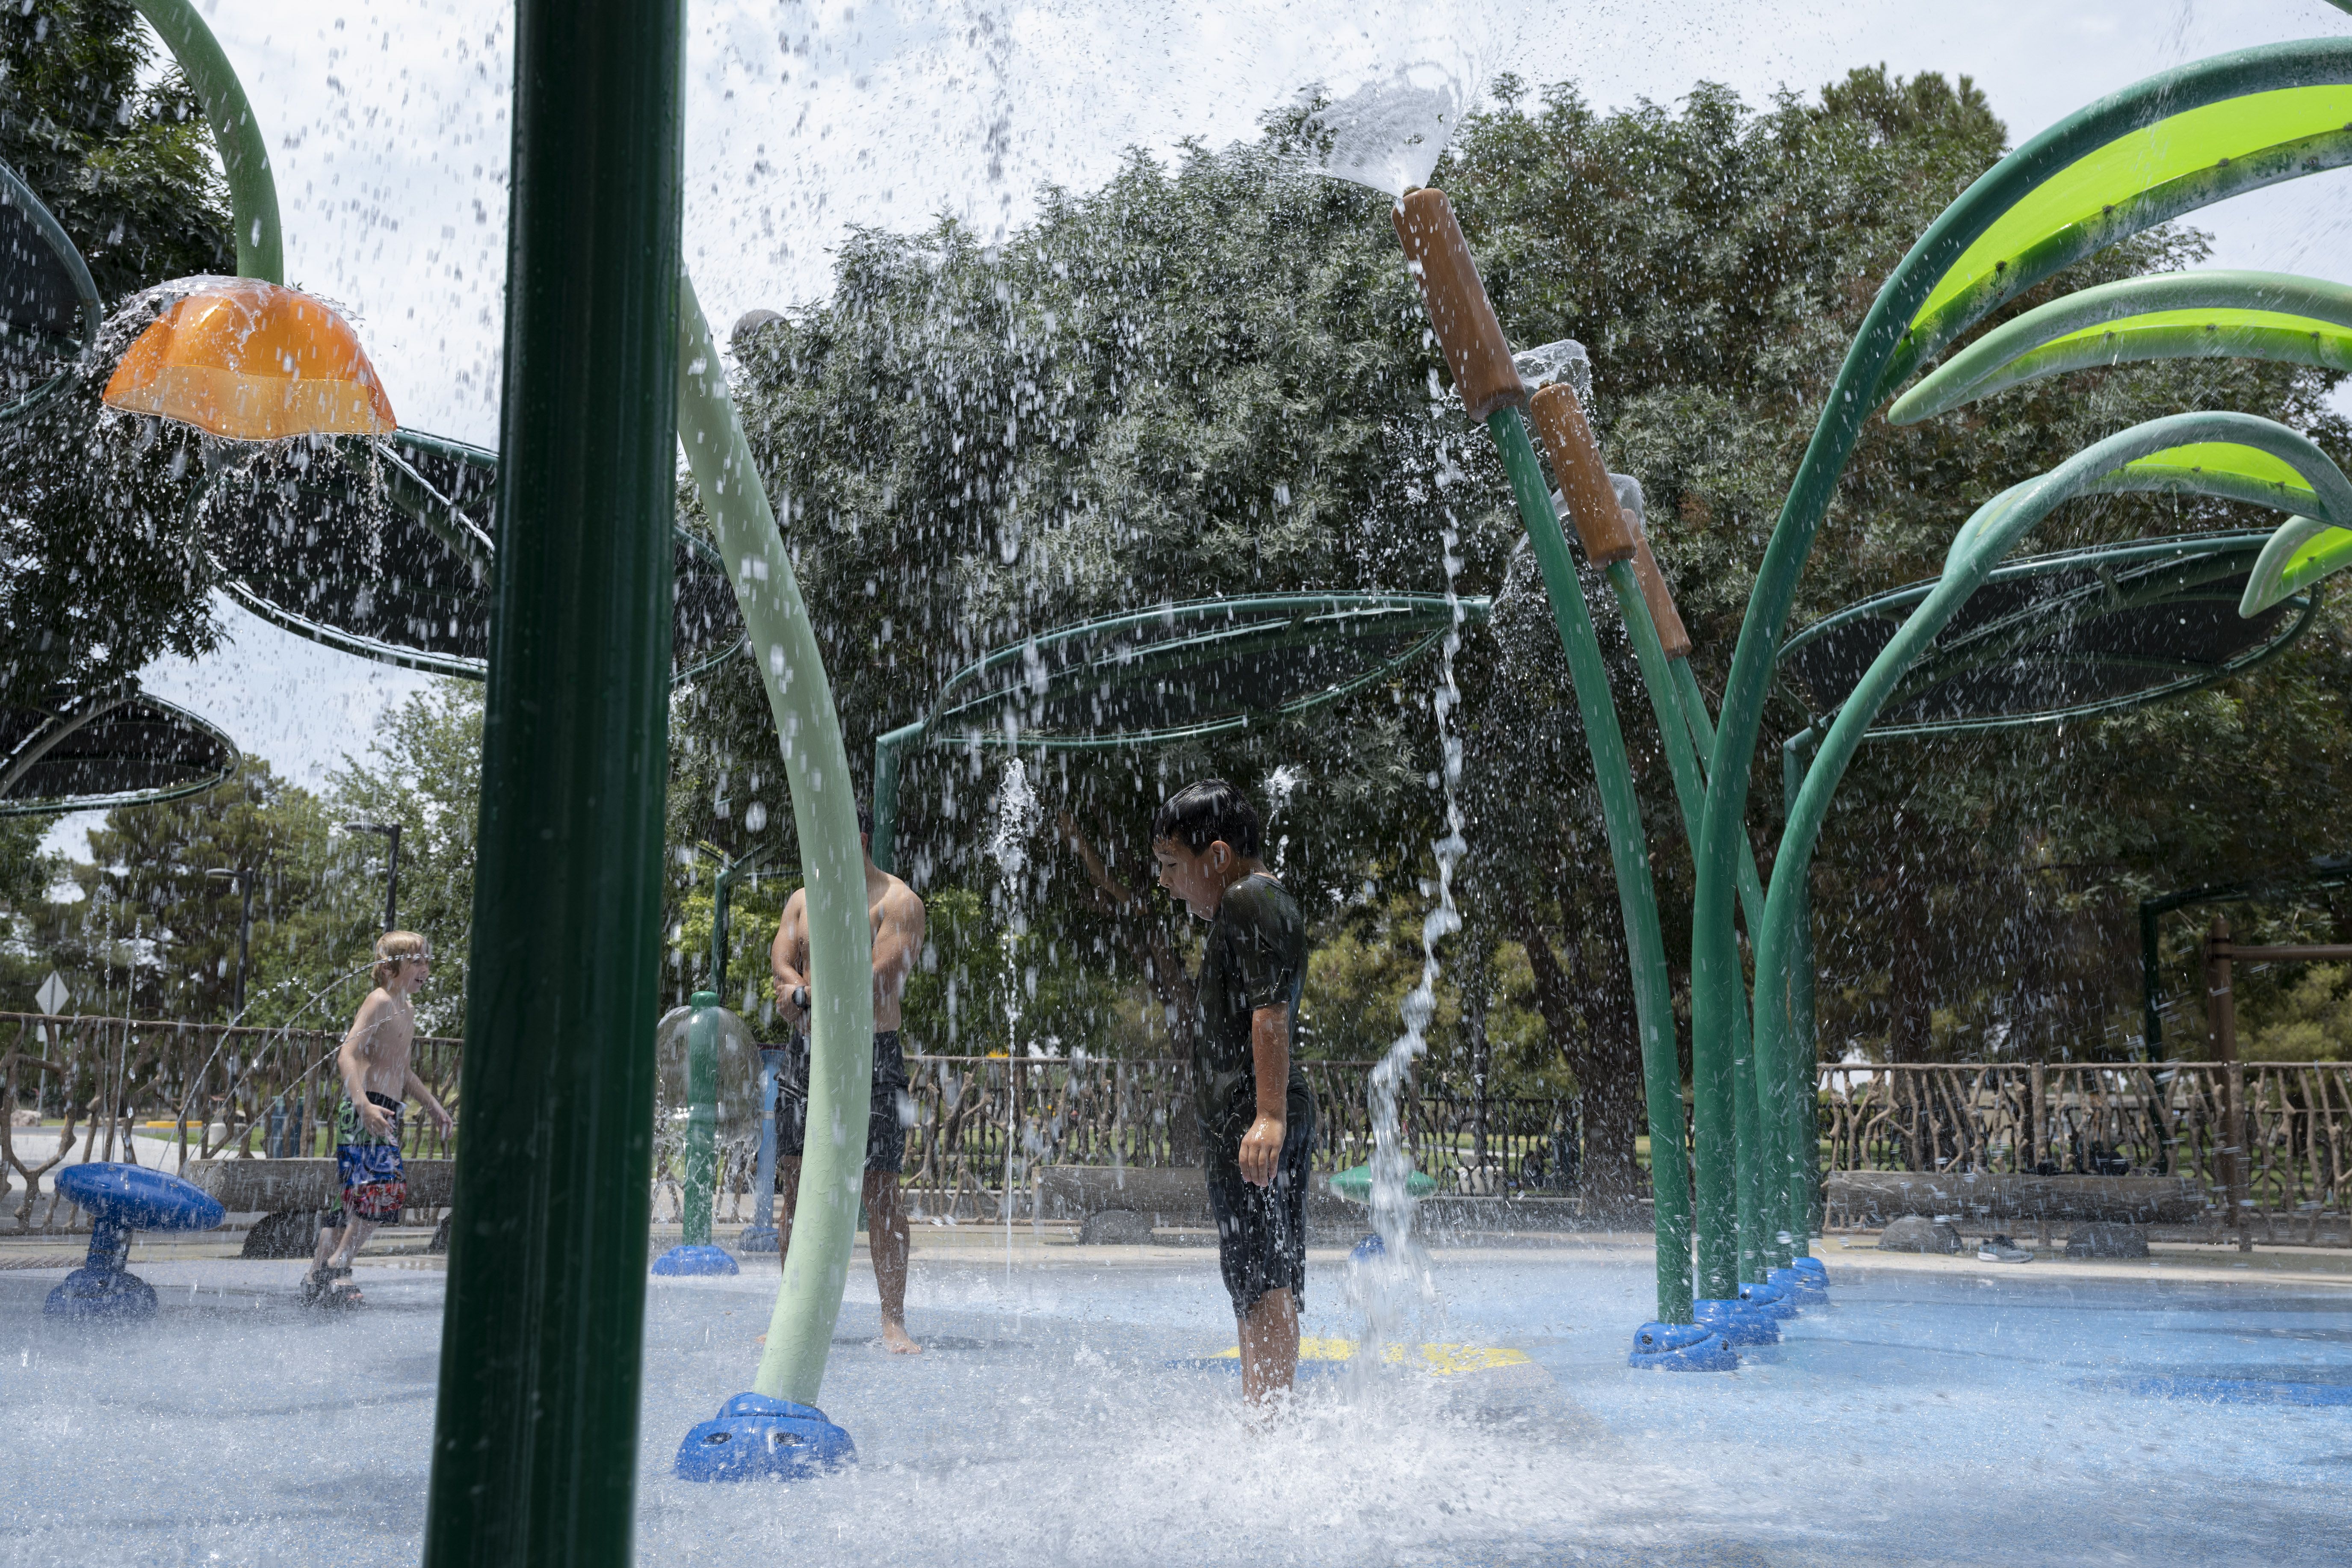 Children cool off in water sprinklers at a park in Las Vegas on June 16, 2021